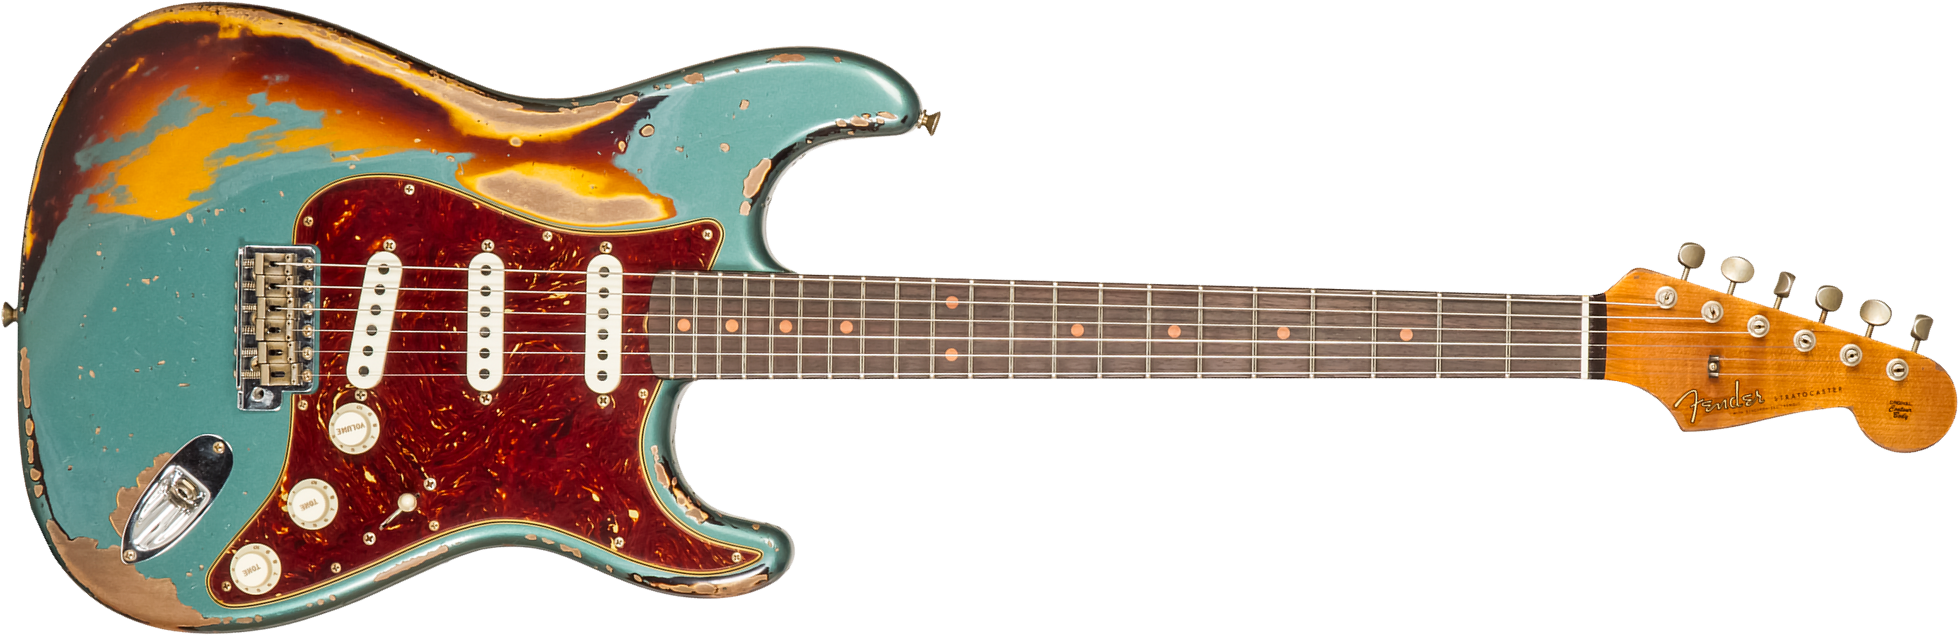 Fender Custom Shop Strat 1961 3s Trem Rw #cz573502 - Super Heavy Relic Sherwood Green Metallic O. 3-cs - E-Gitarre in Str-Form - Main picture